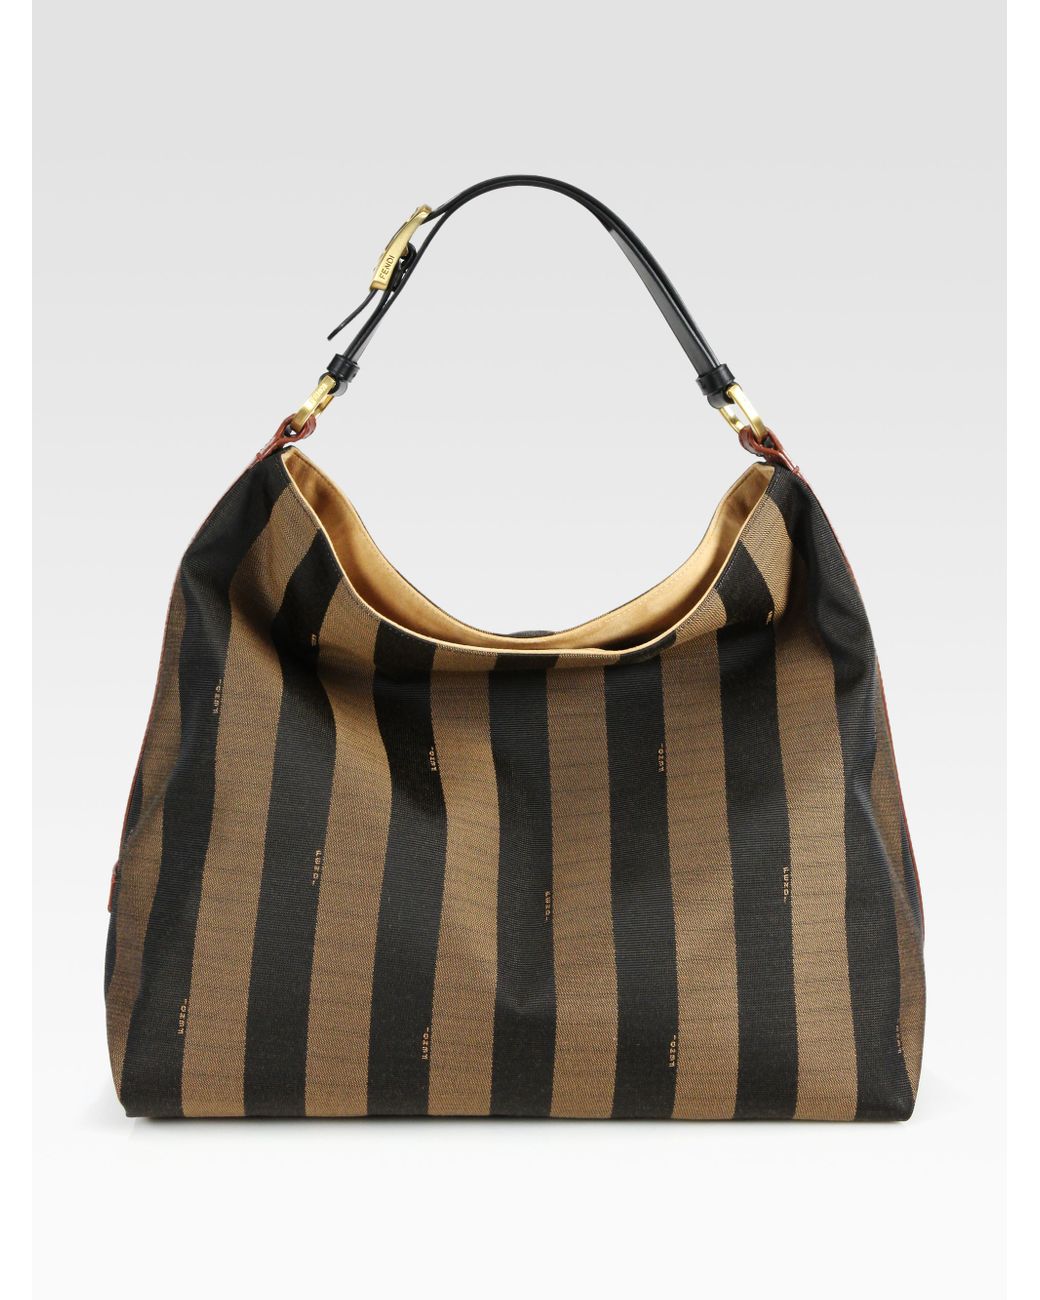 Vintage FENDI pecan stripe jacquard fabric handbag with black